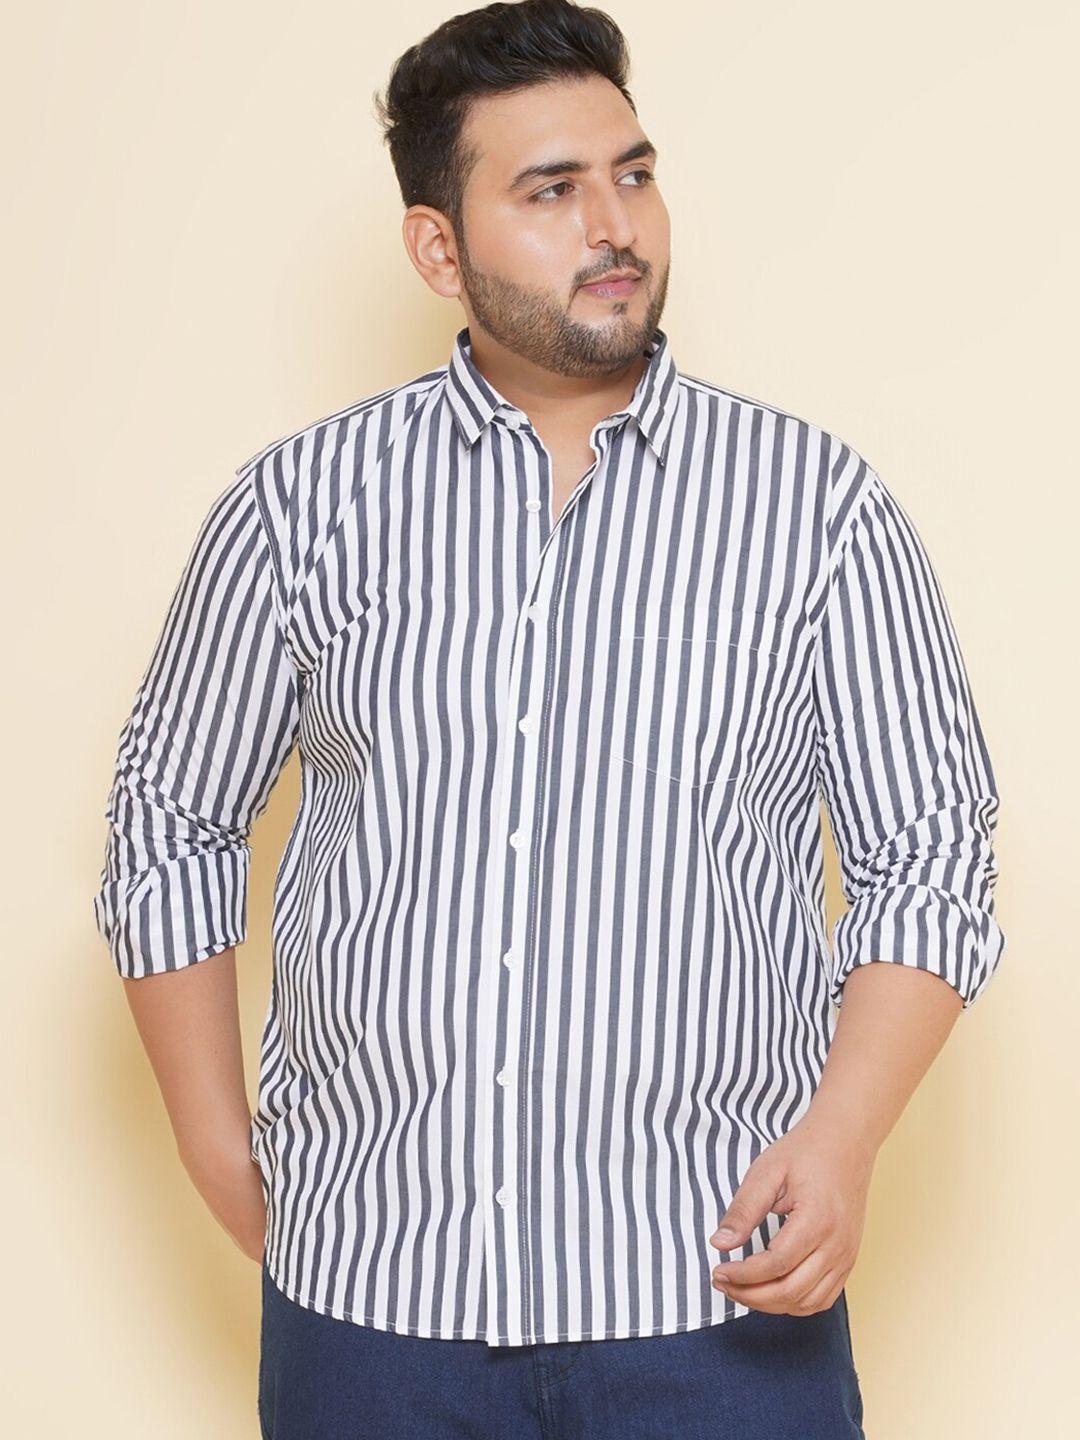 john pride plus size vertical striped casual pure cotton shirt